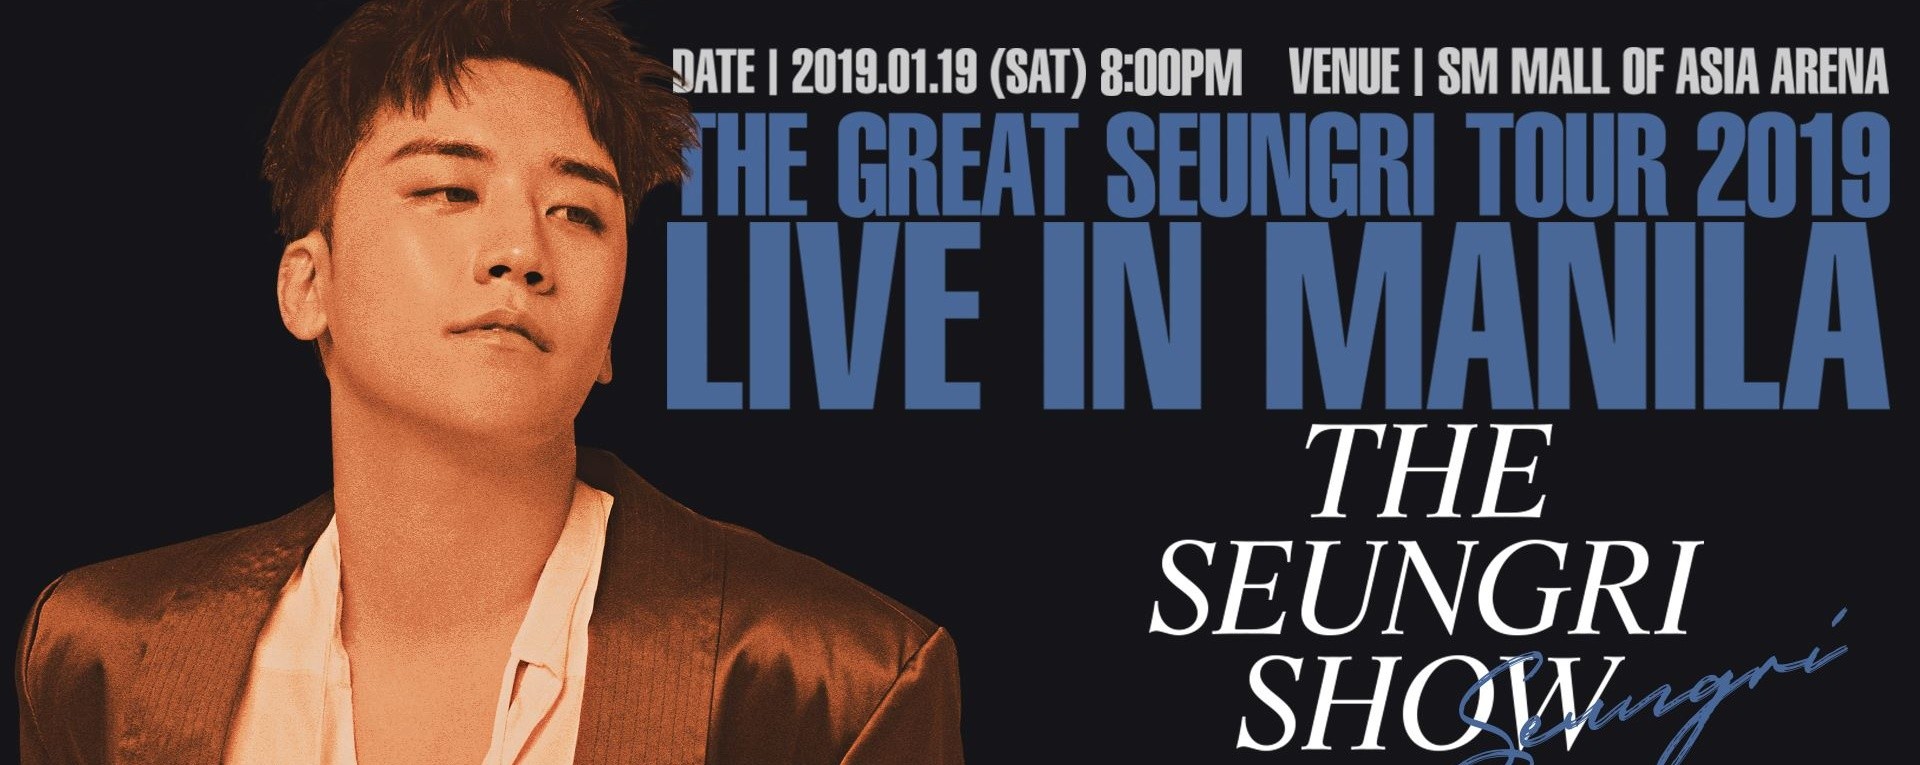 The Great Seungri Live in Manila